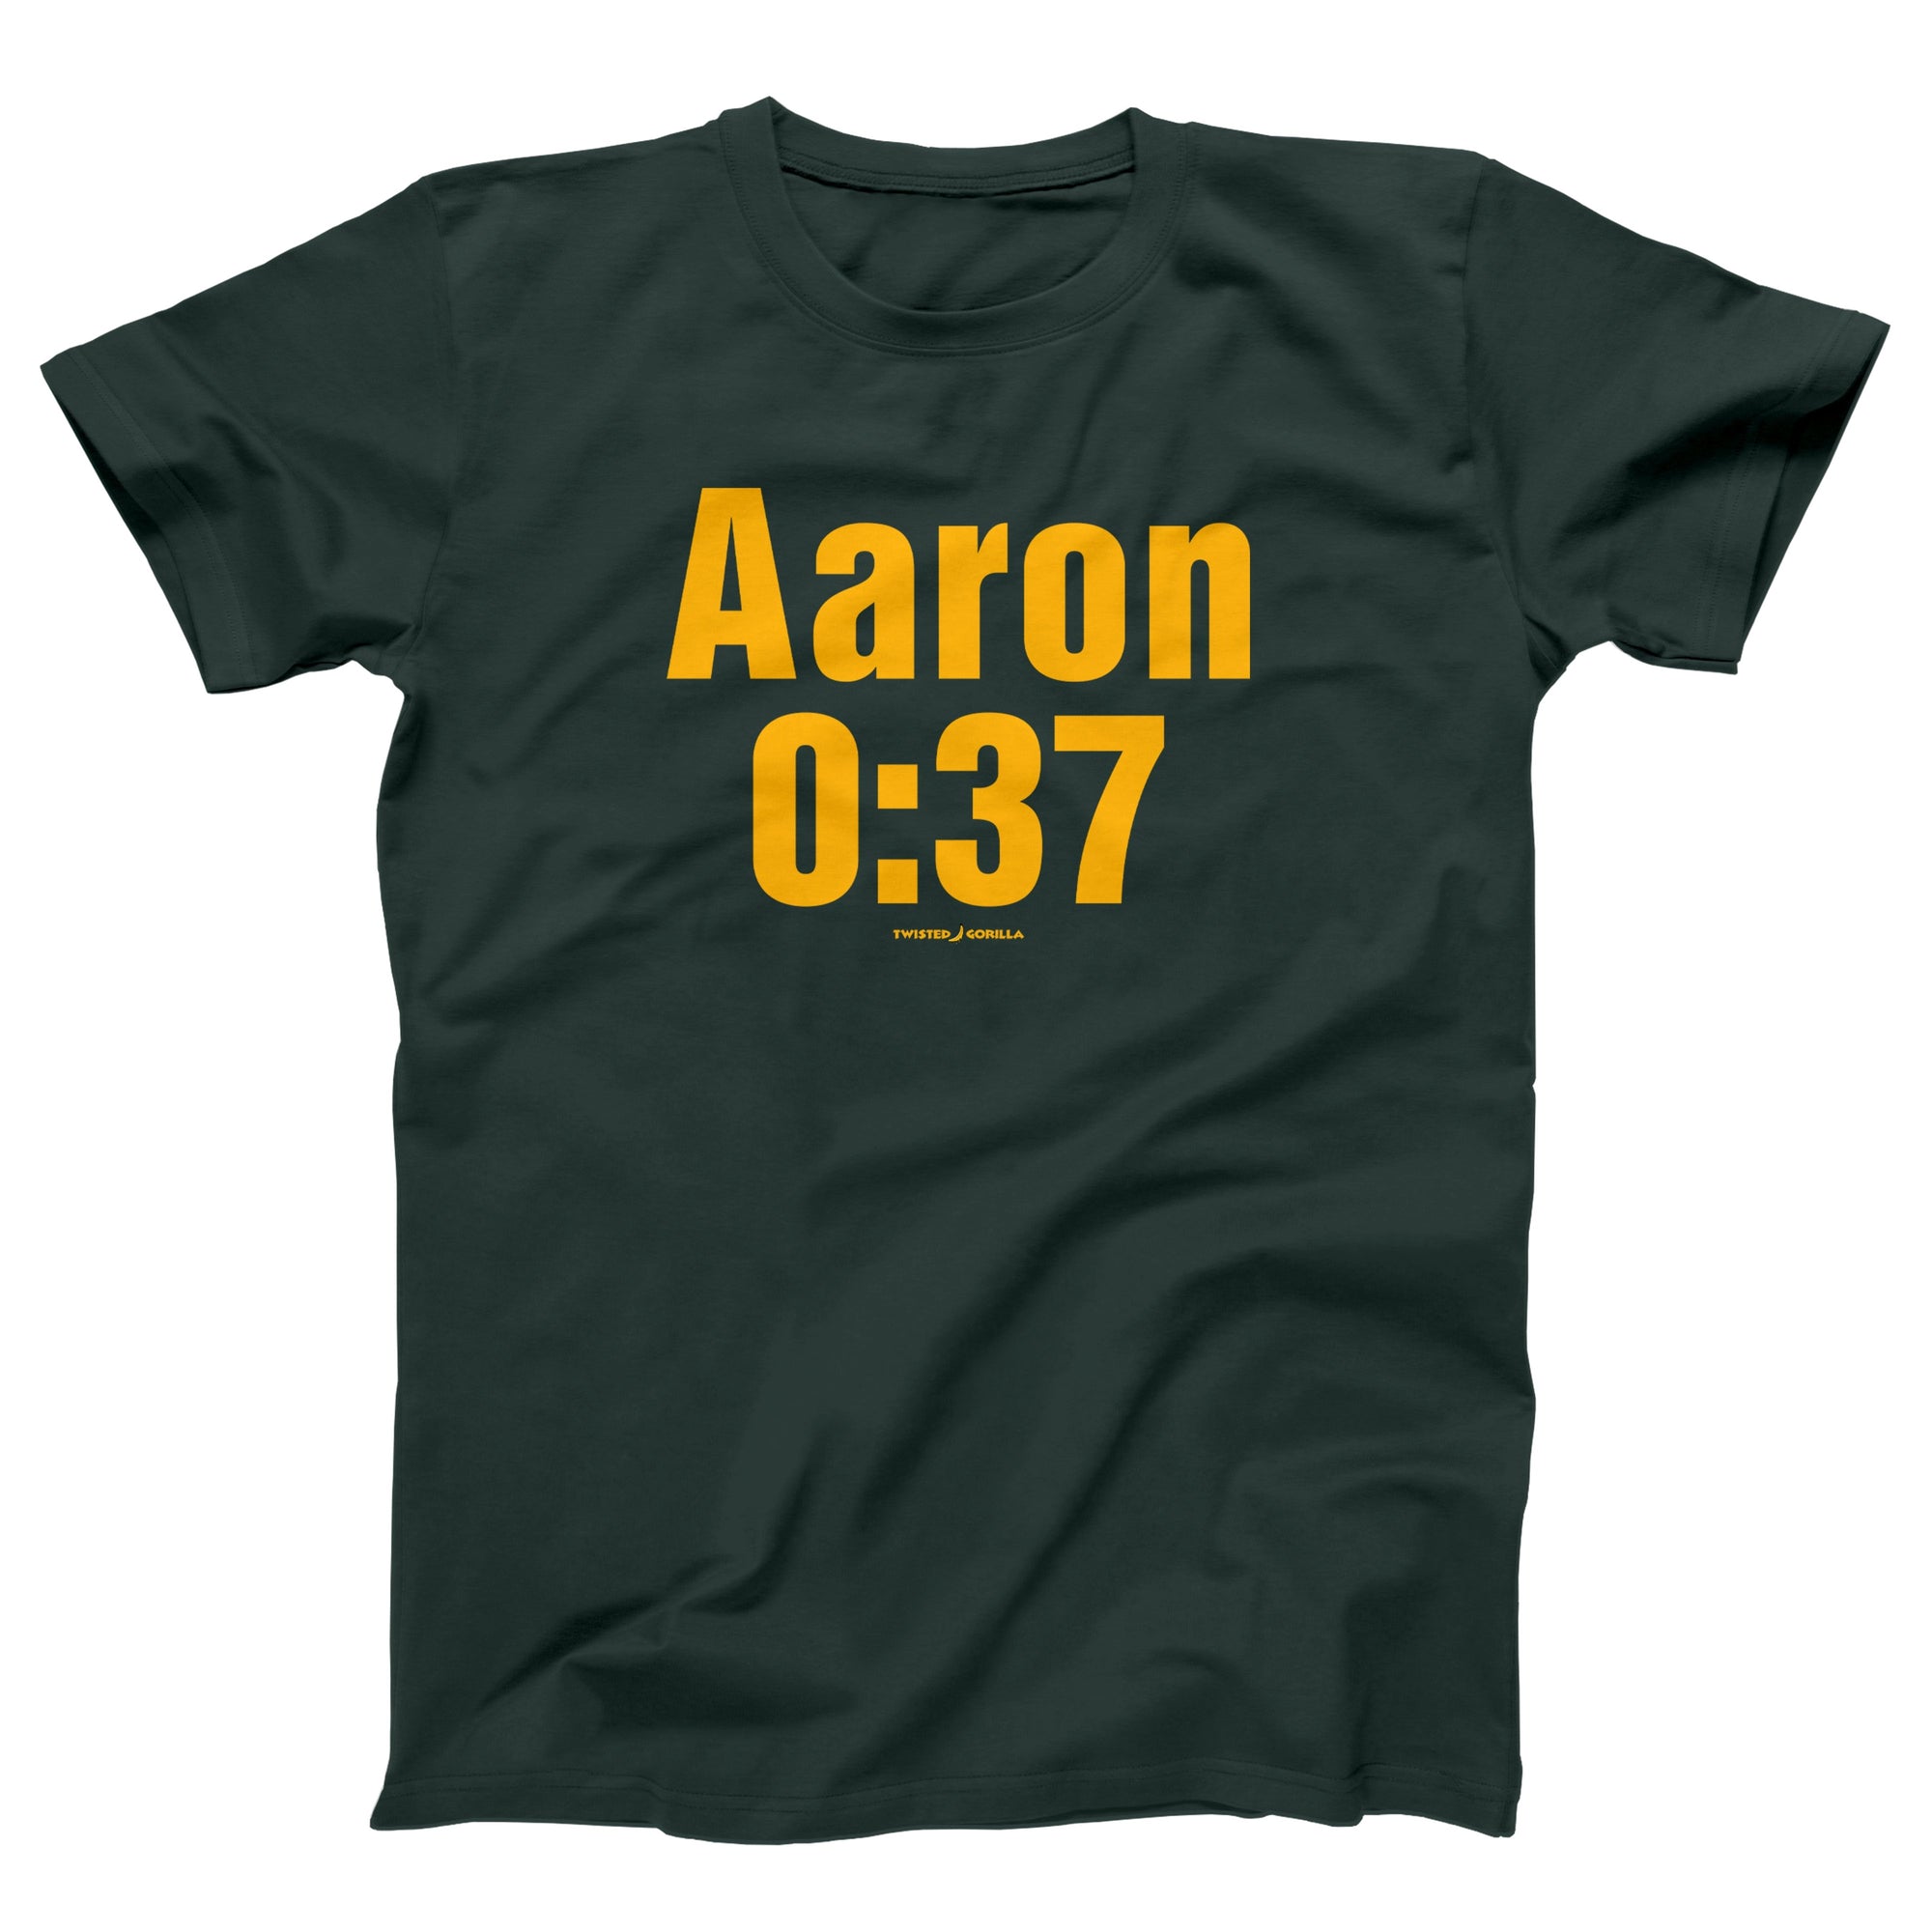 Aaron 0:37 Adult Unisex T-Shirt - Twisted Gorilla